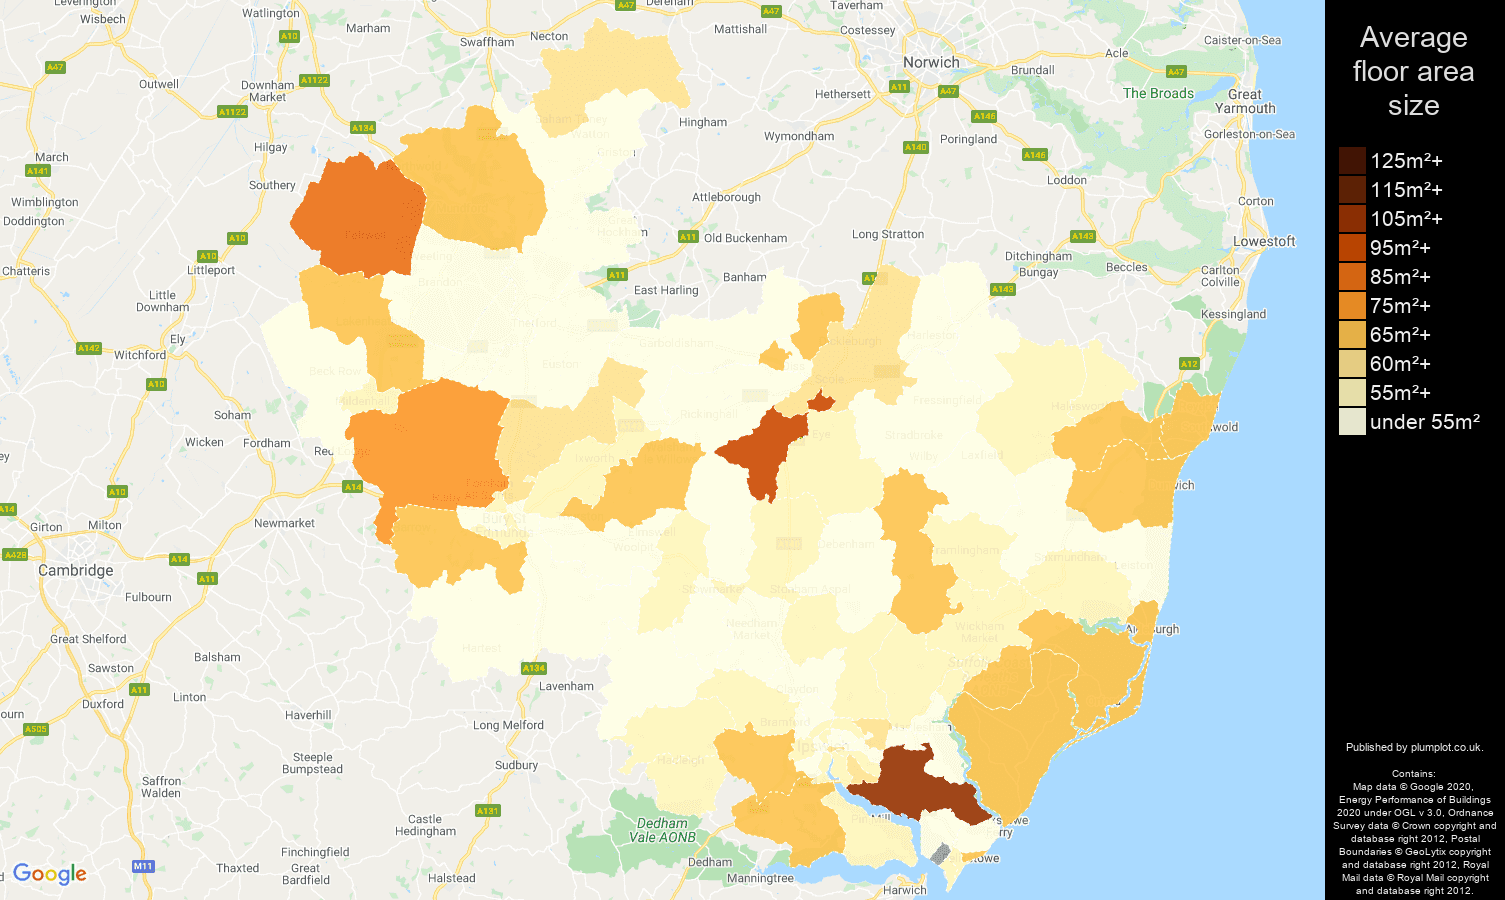 Ipswich map of average floor area size of flats